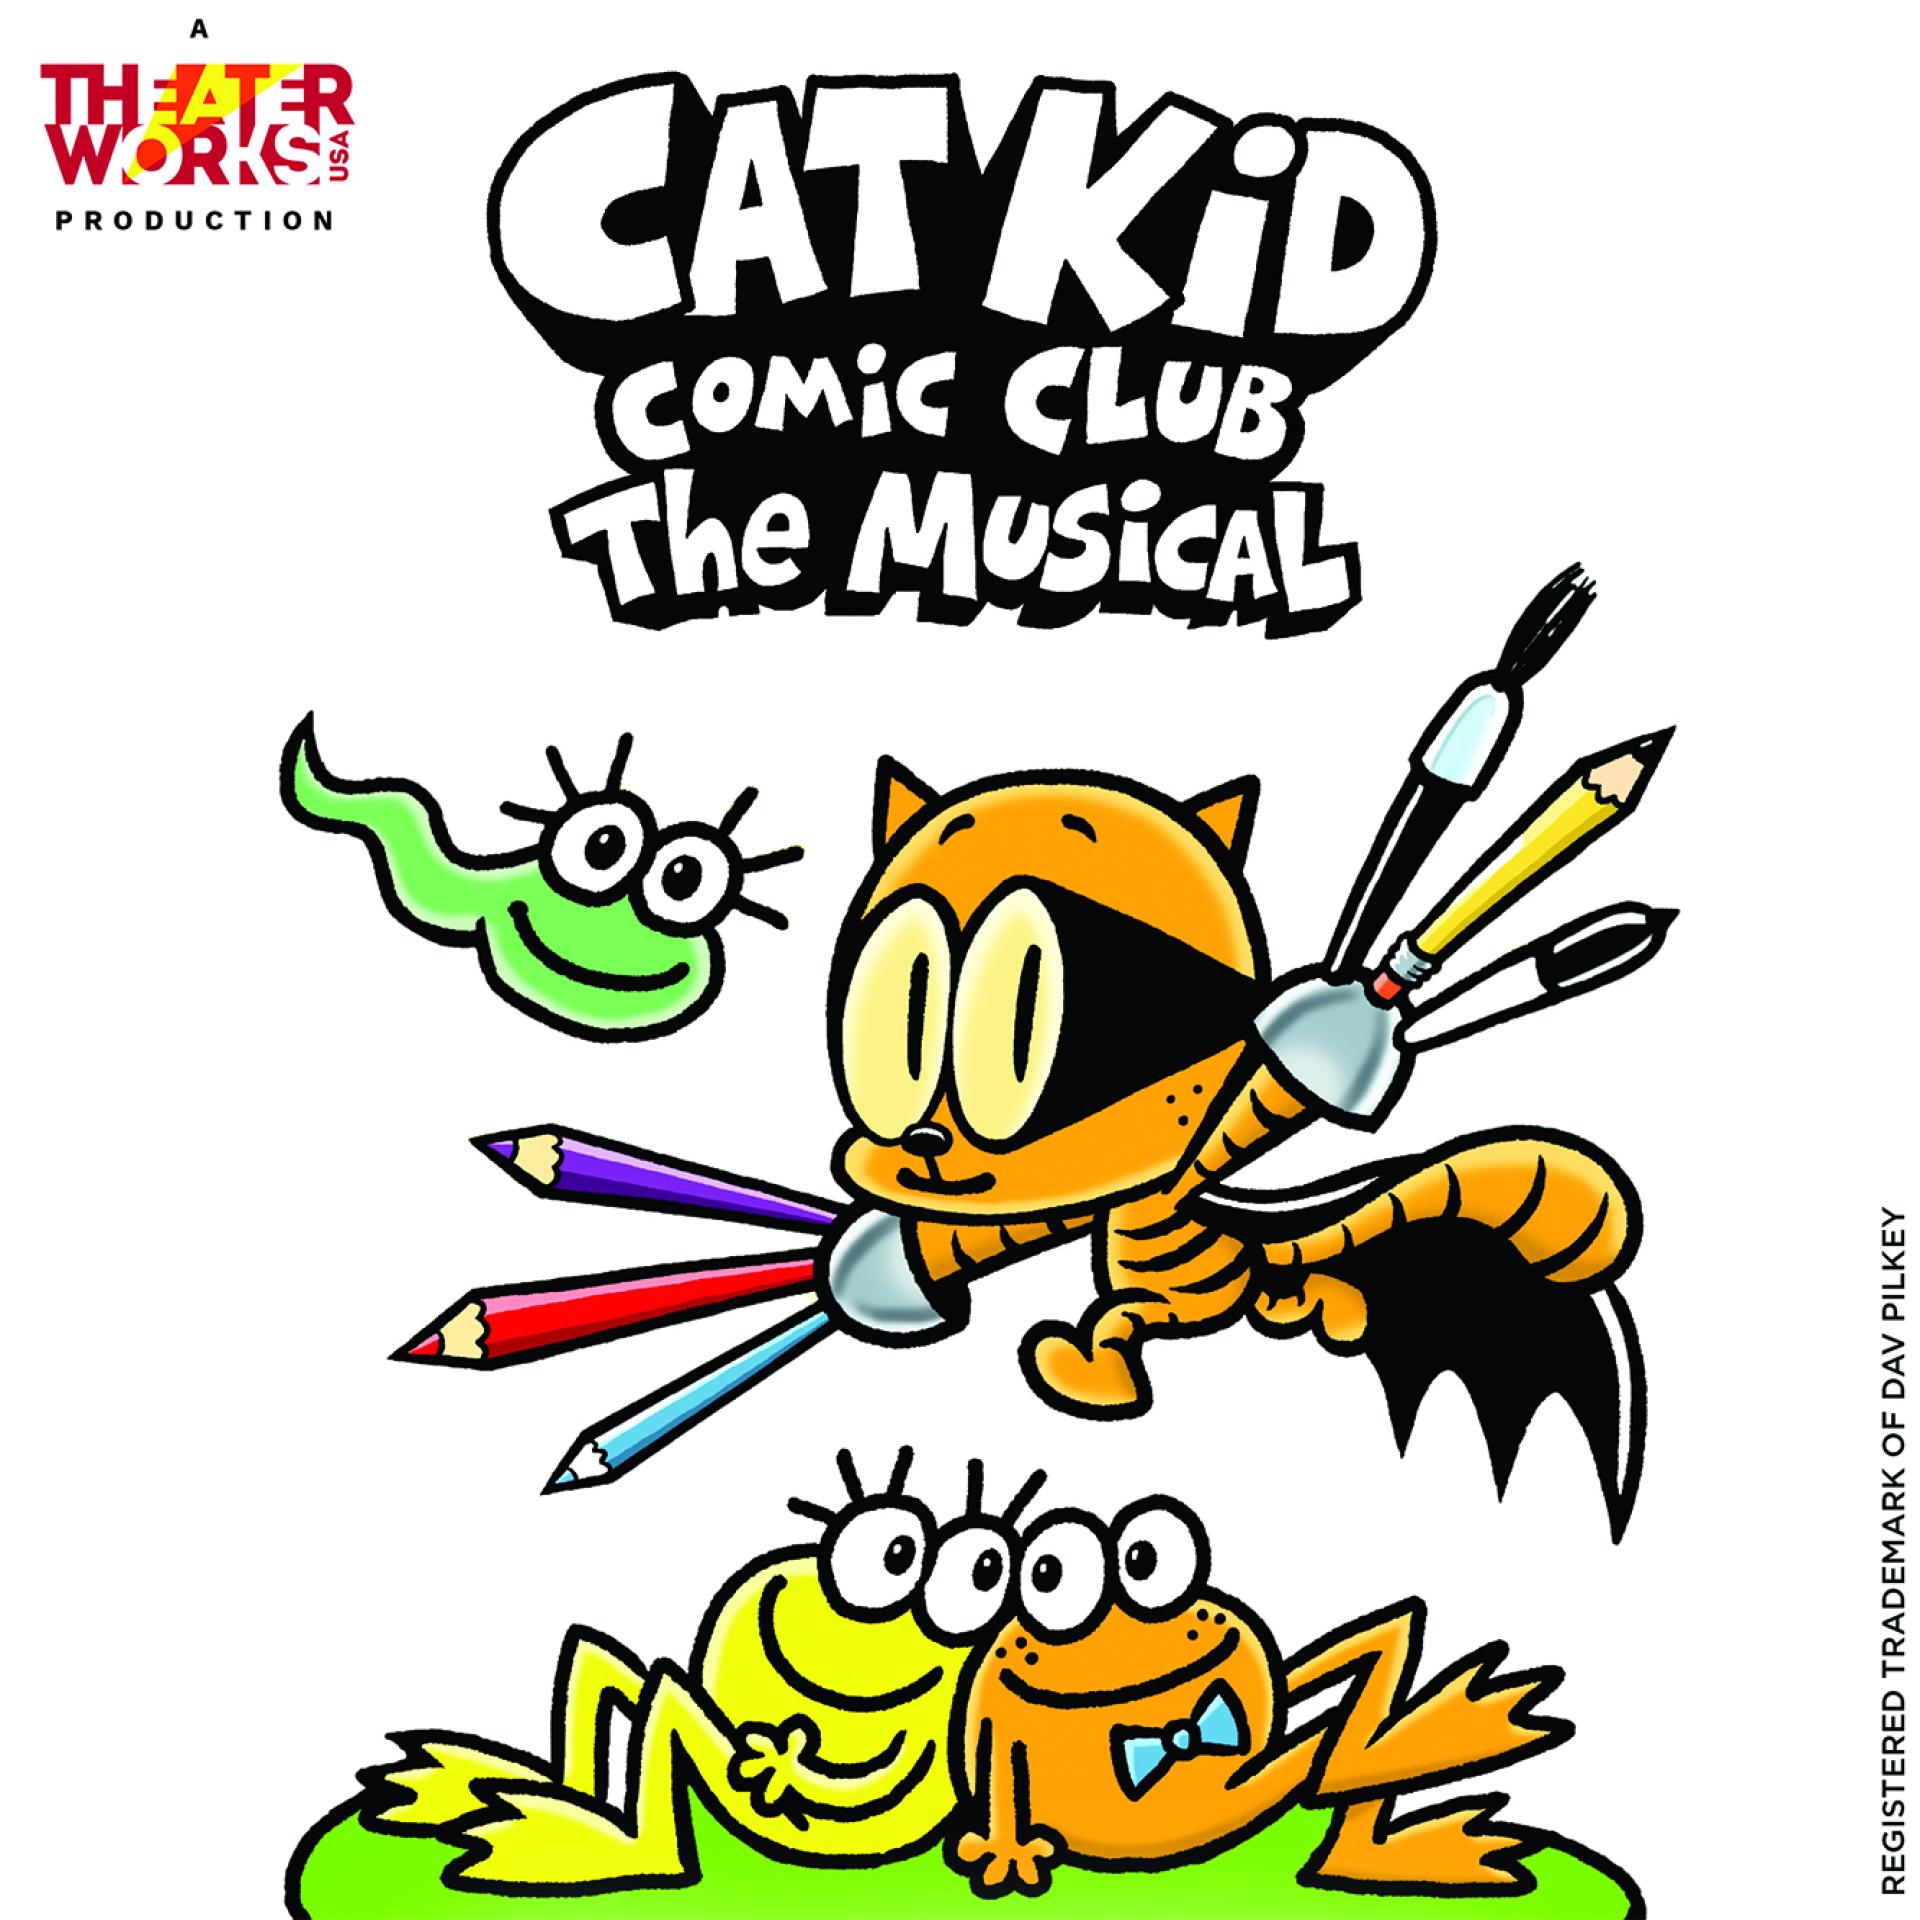 Logo featuring a Cat dressed as a super hero.